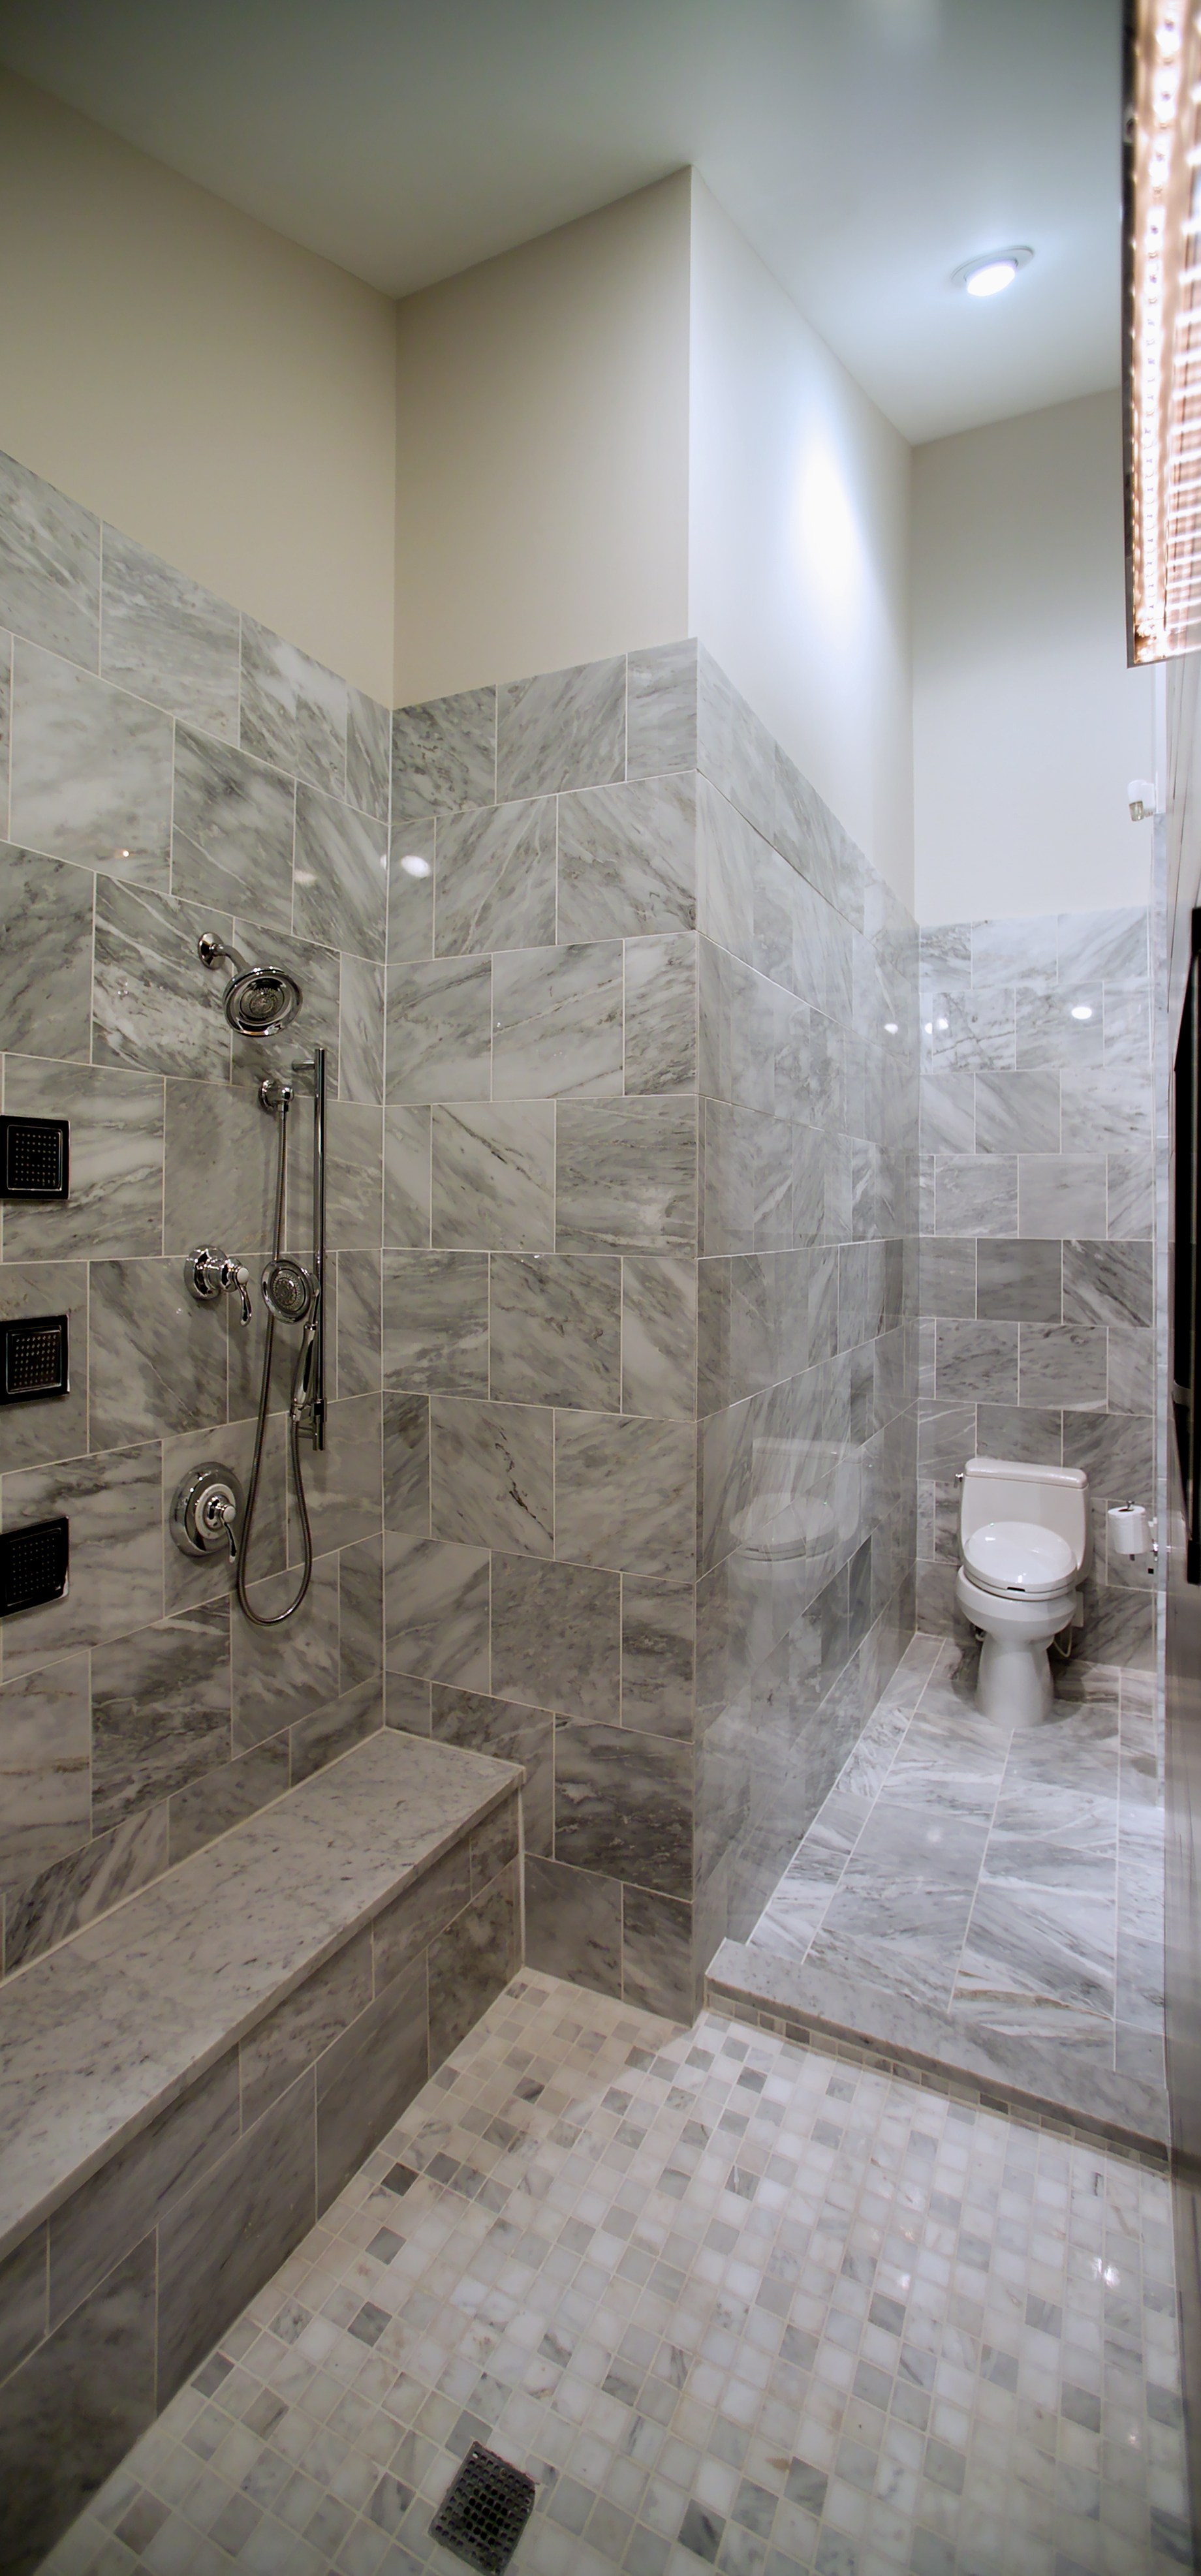 Master Bath 5 - View of Shower & Toilet Area.jpg